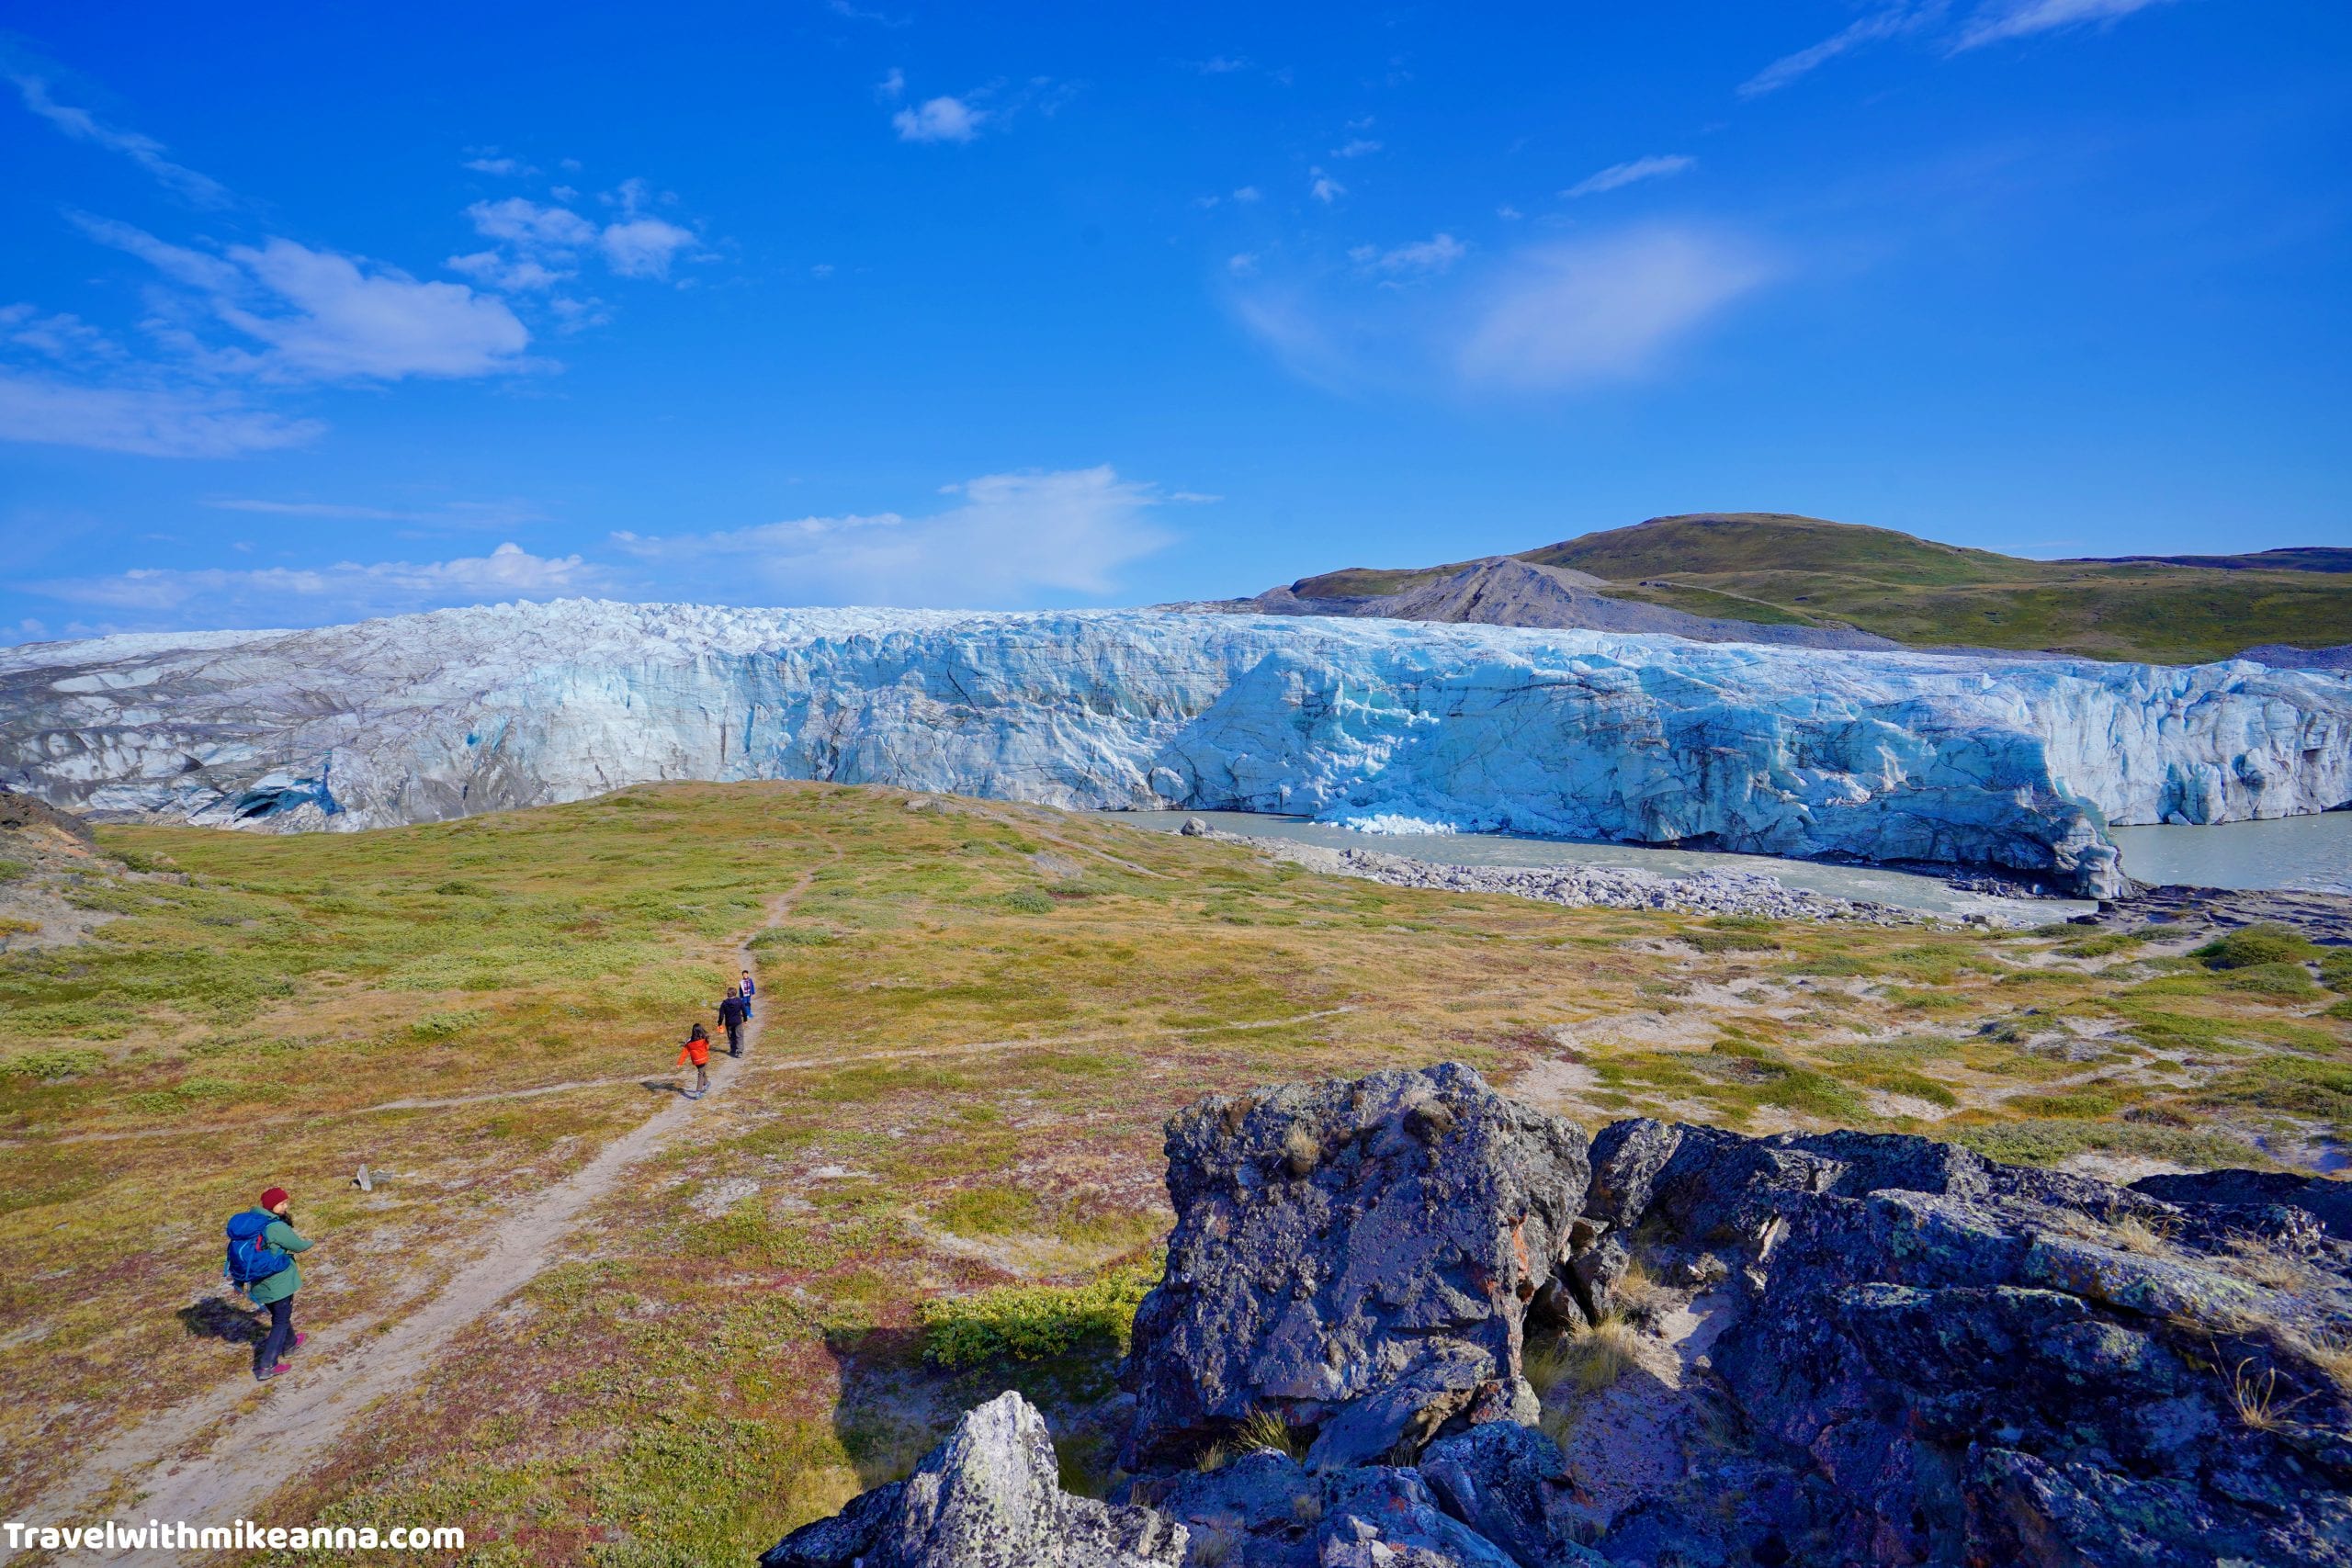  前往羅素冰河 russel glacier 的健行步道